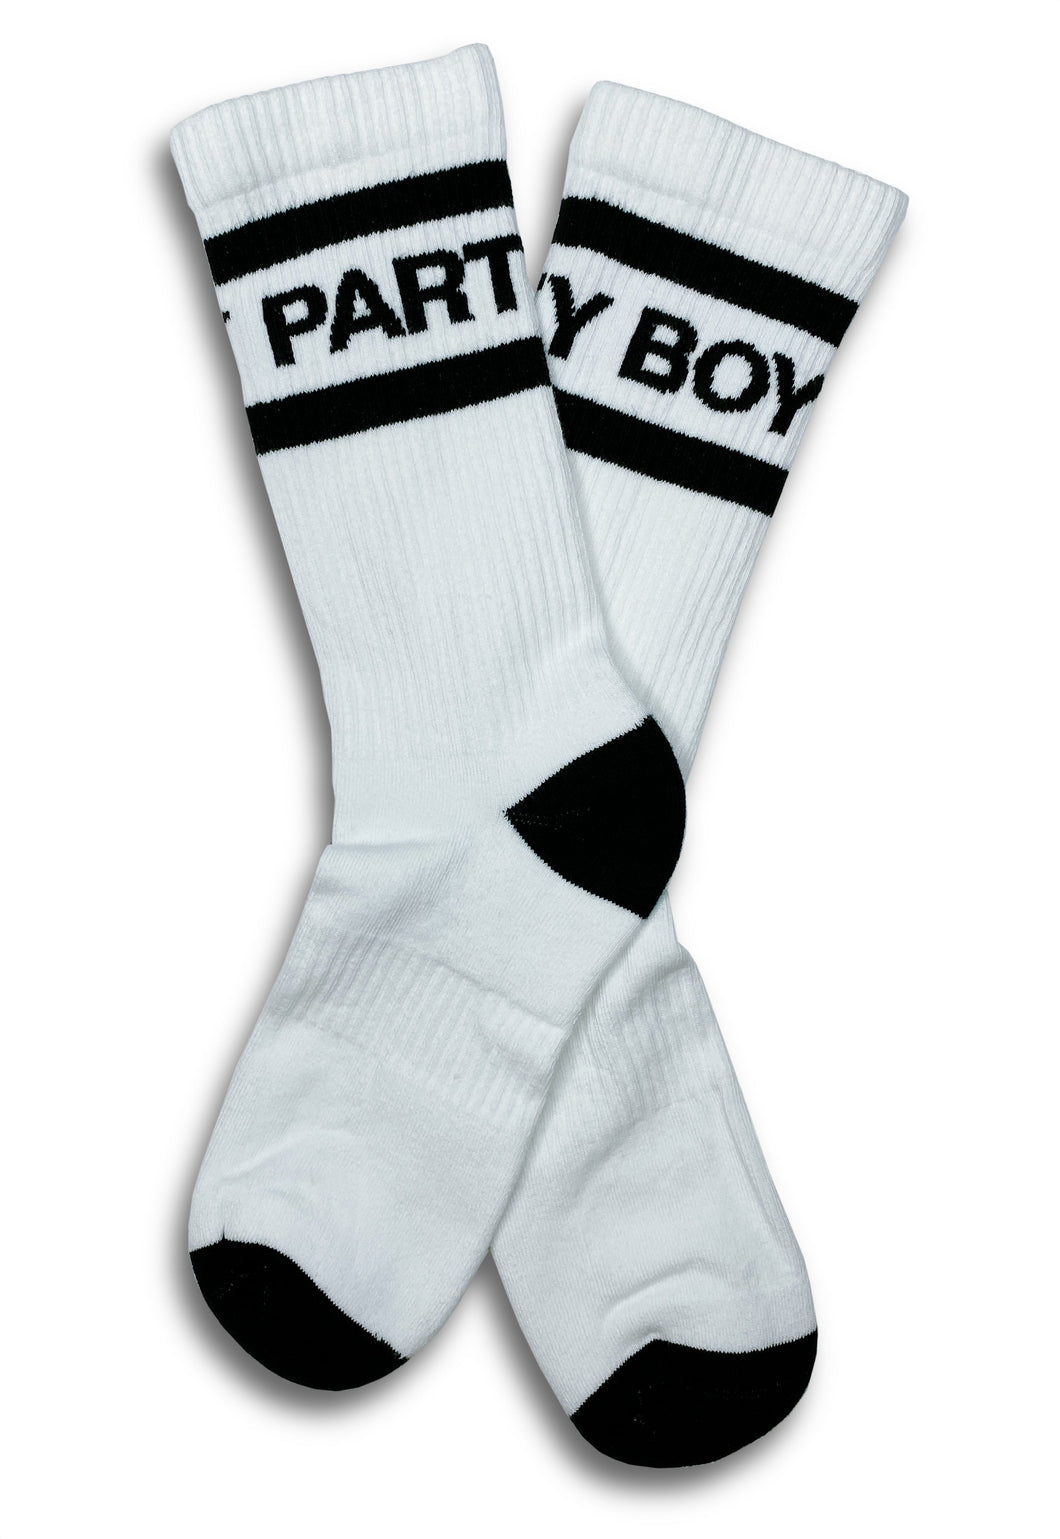 PARTY BOY Socks White/Black